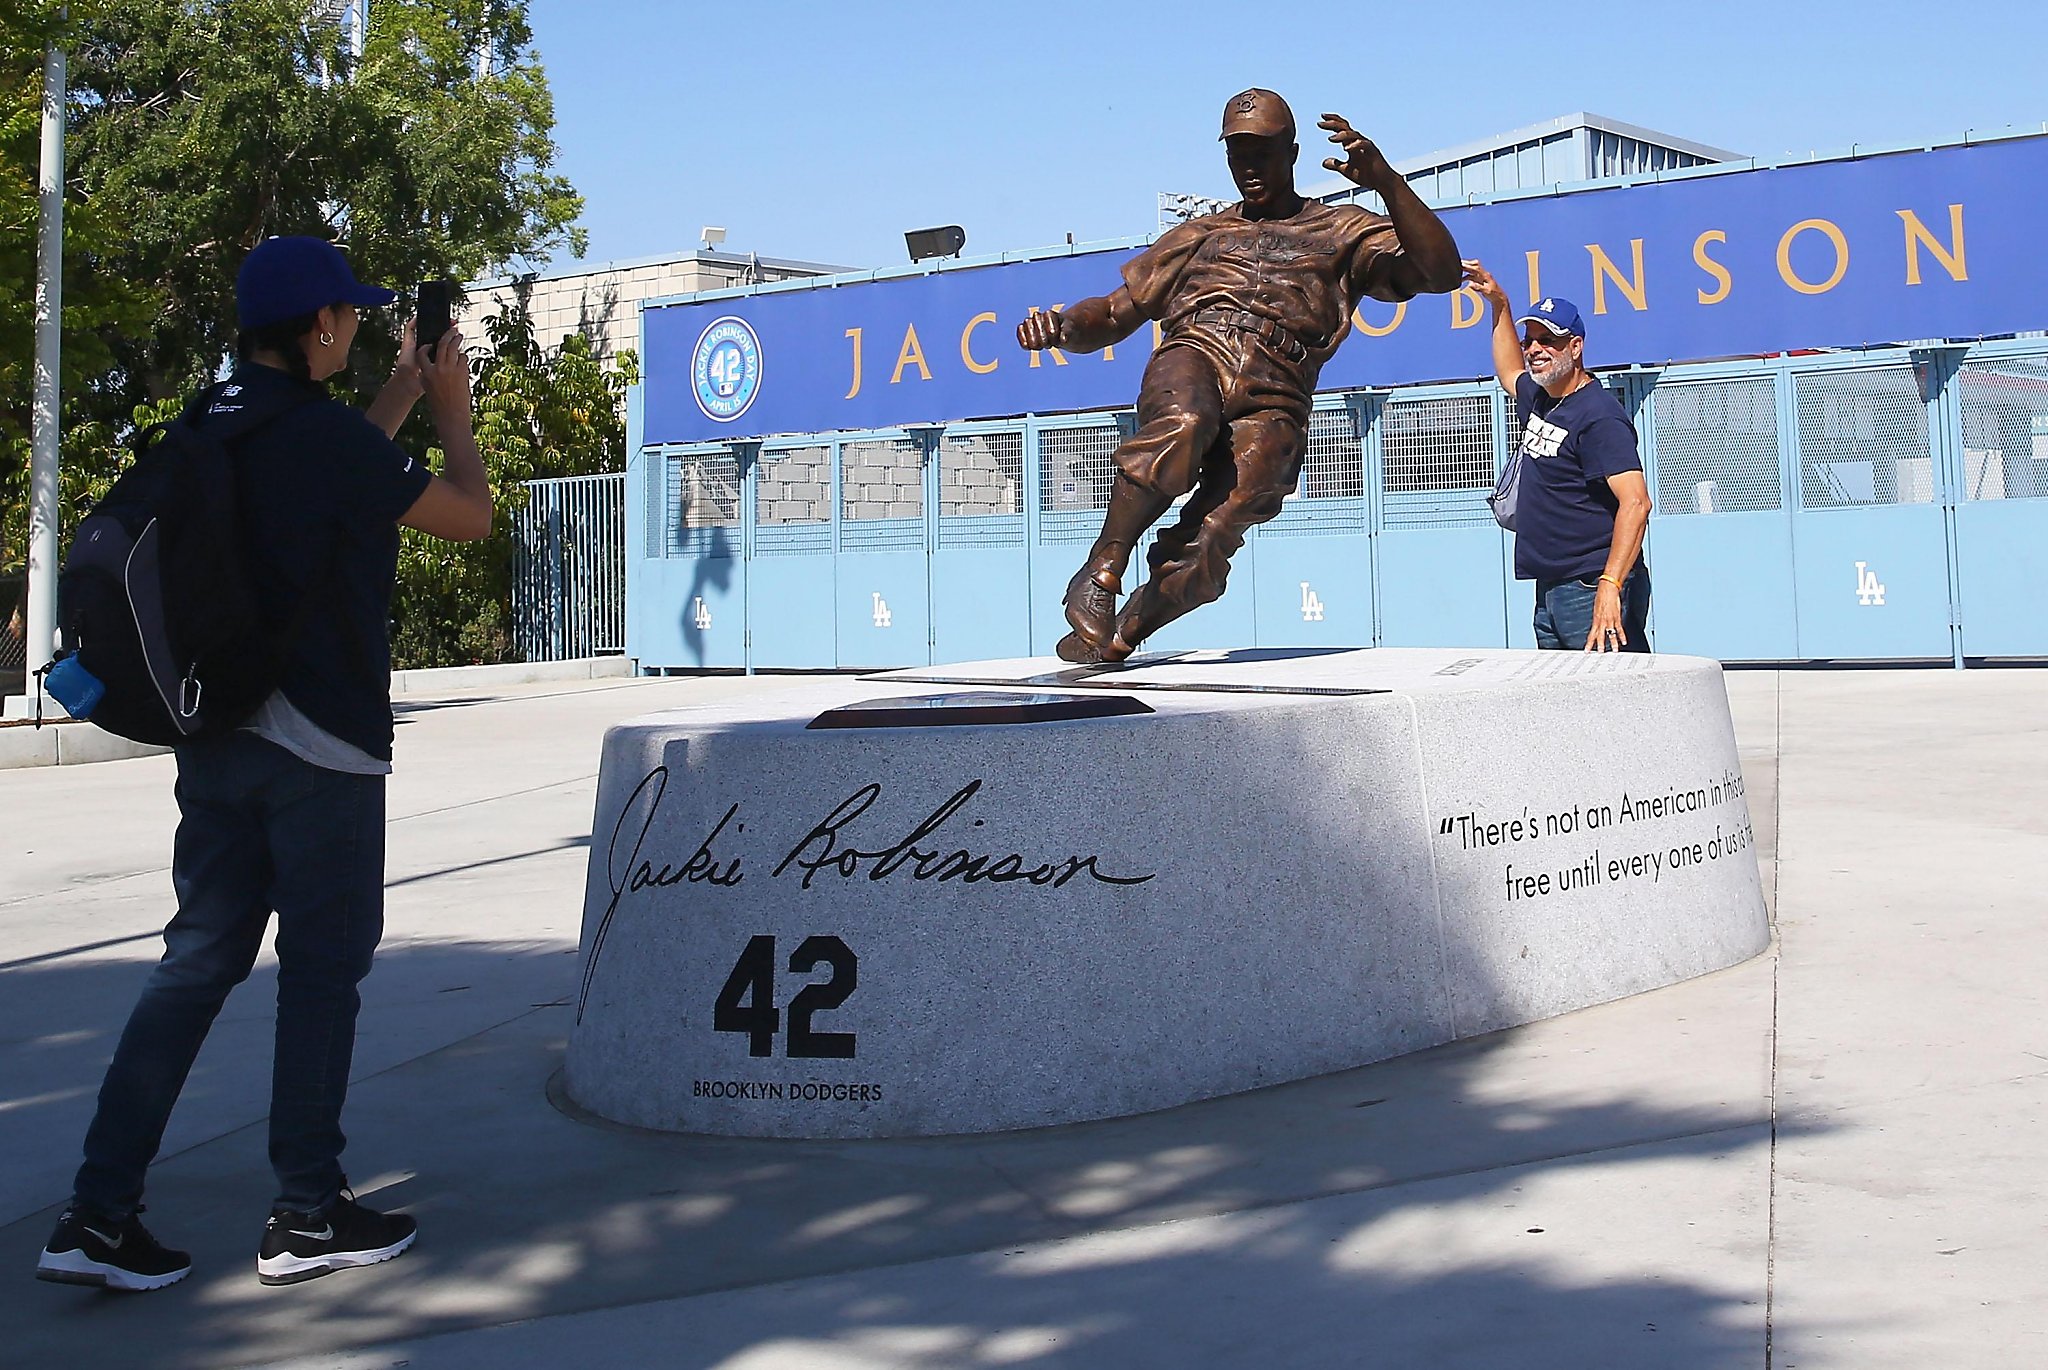 Dodger Stadium statue highlights Jackie Robinson Day across Major